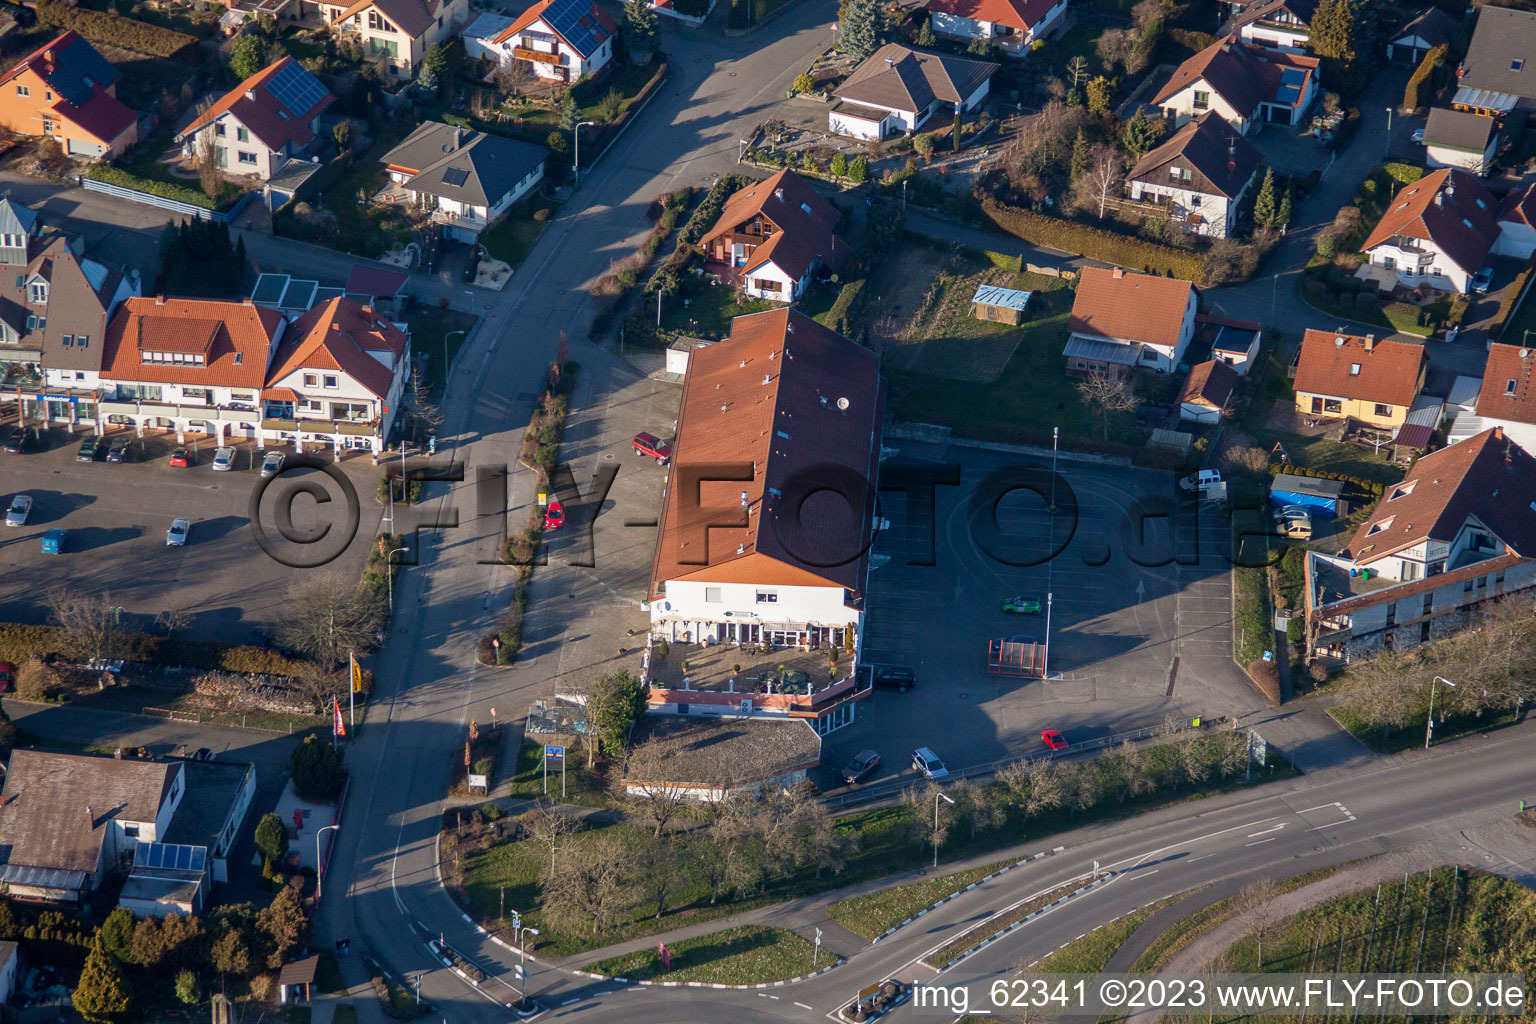 District Rechtenbach in Schweigen-Rechtenbach in the state Rhineland-Palatinate, Germany out of the air